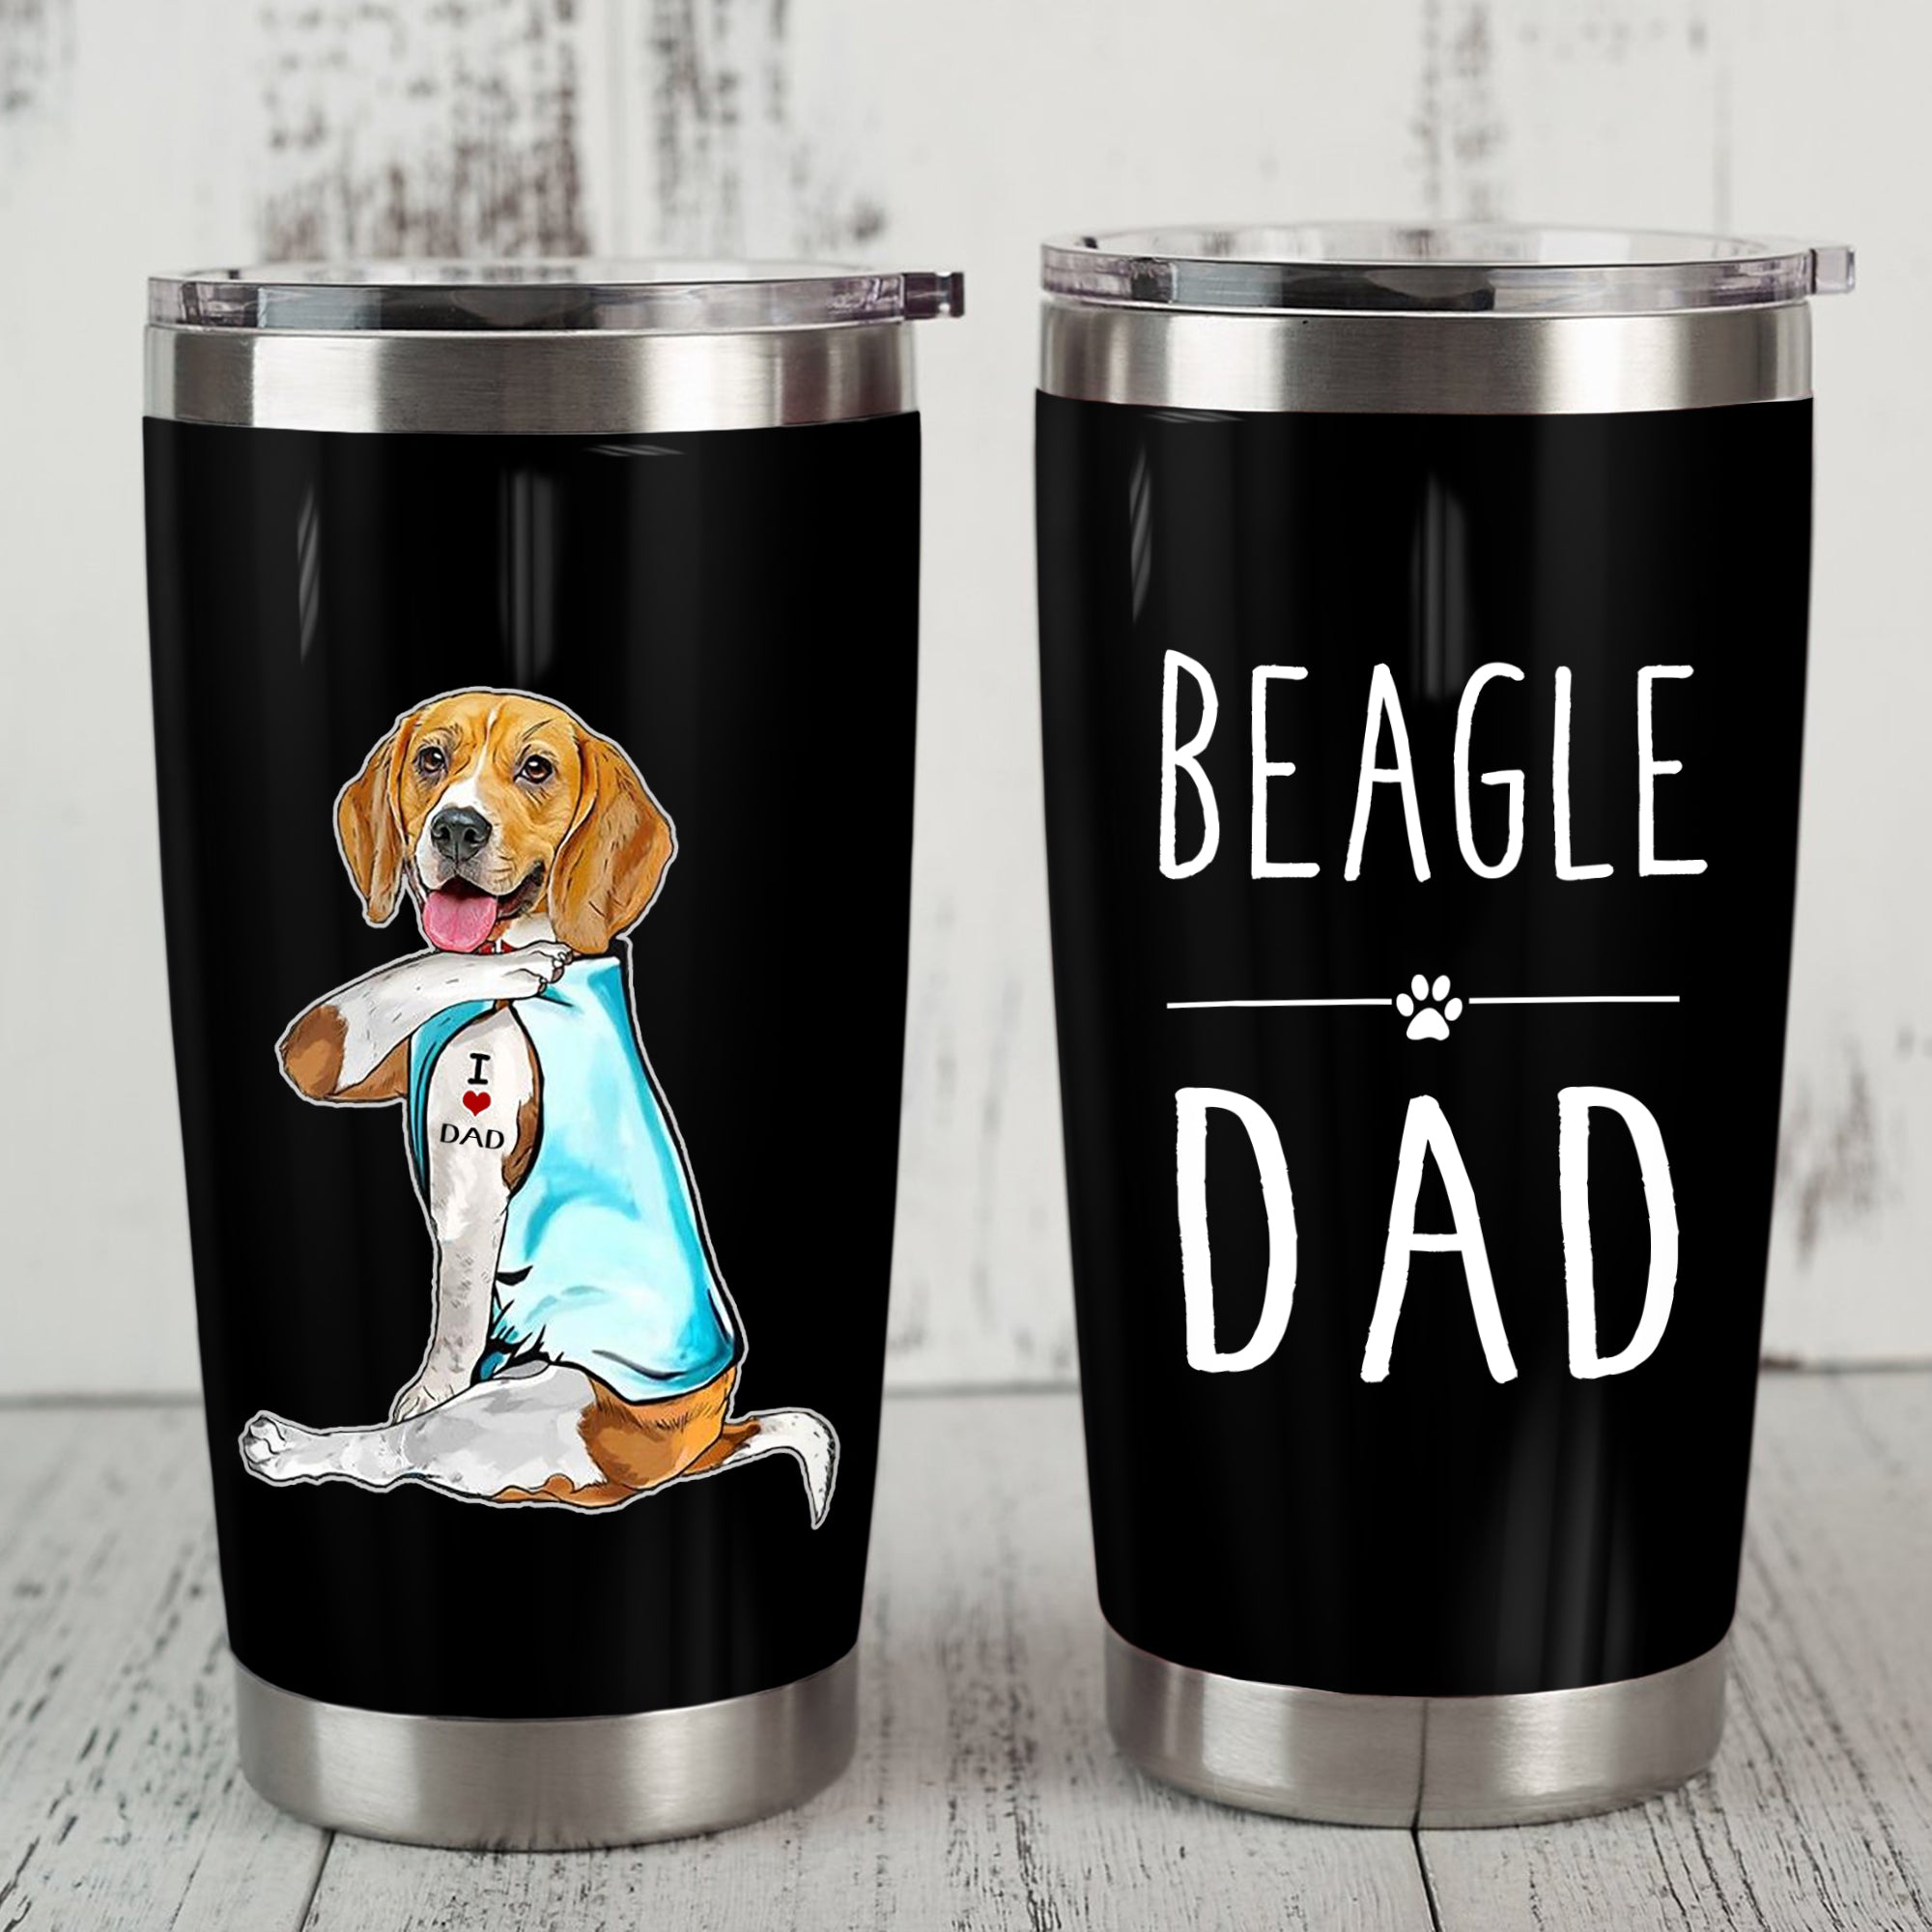 Beagle Dog Steel Tumbler SAP2812 81O36